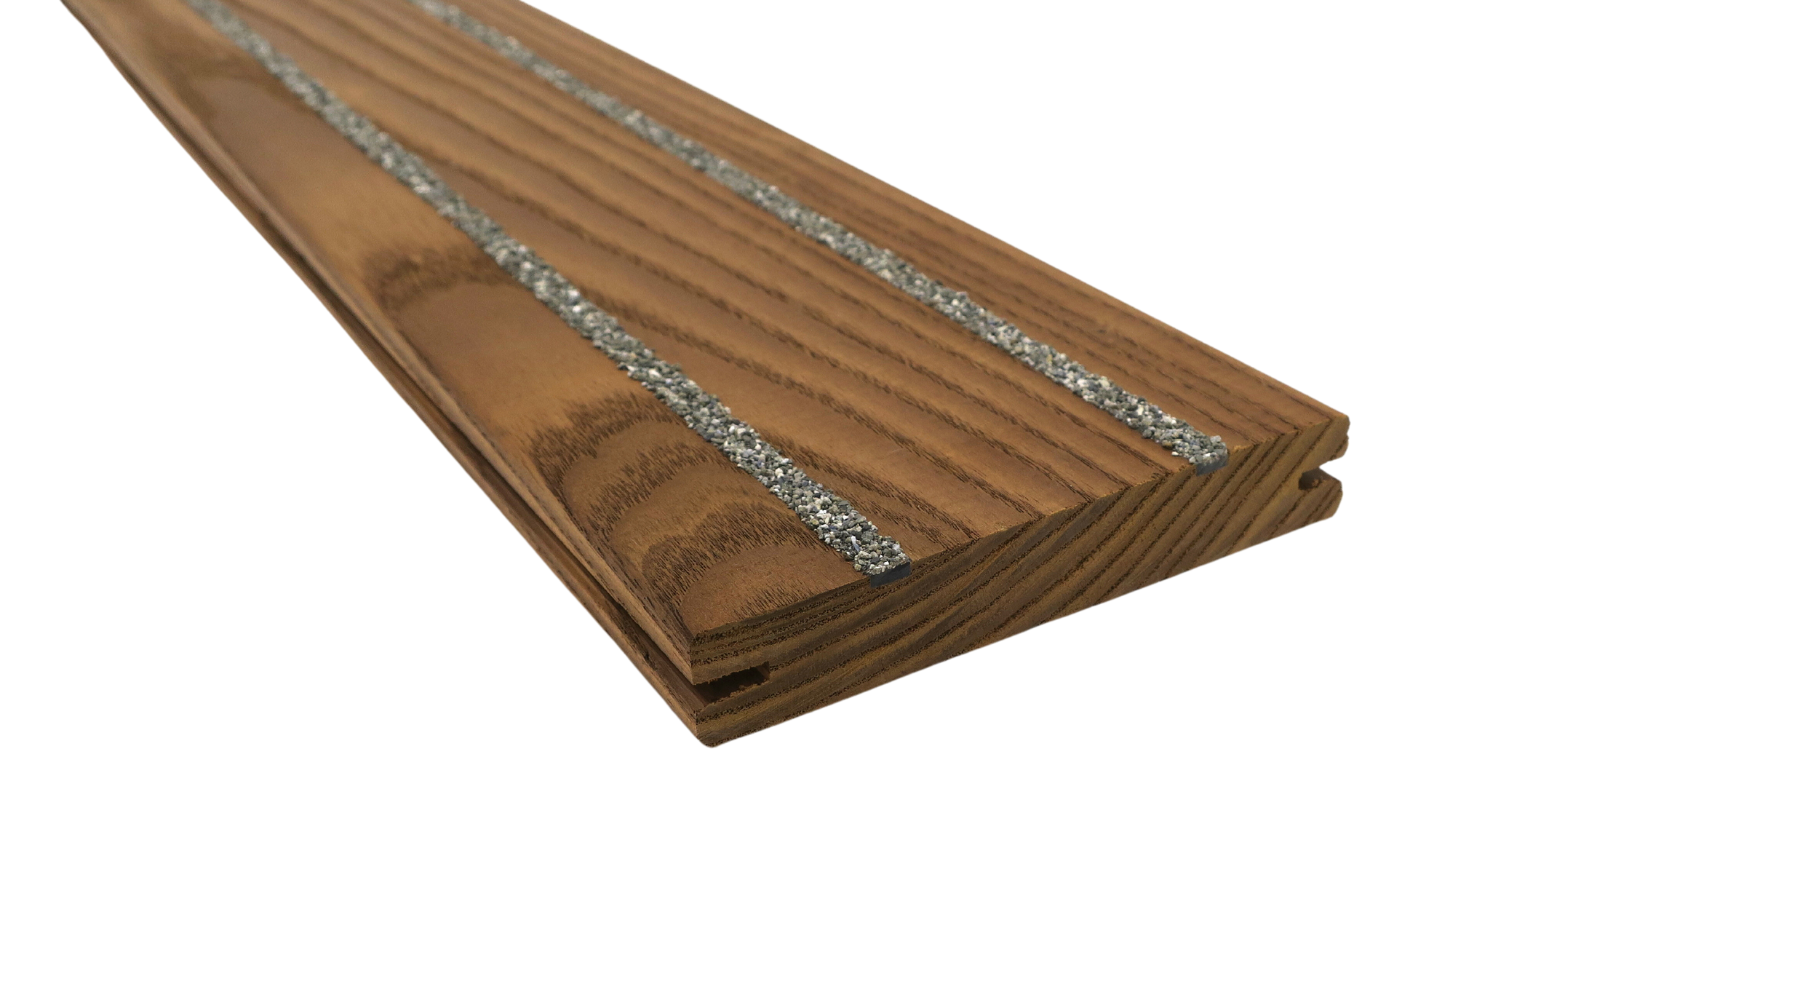 Gripsure Anti-Slip Thermowood Ash Deck Board